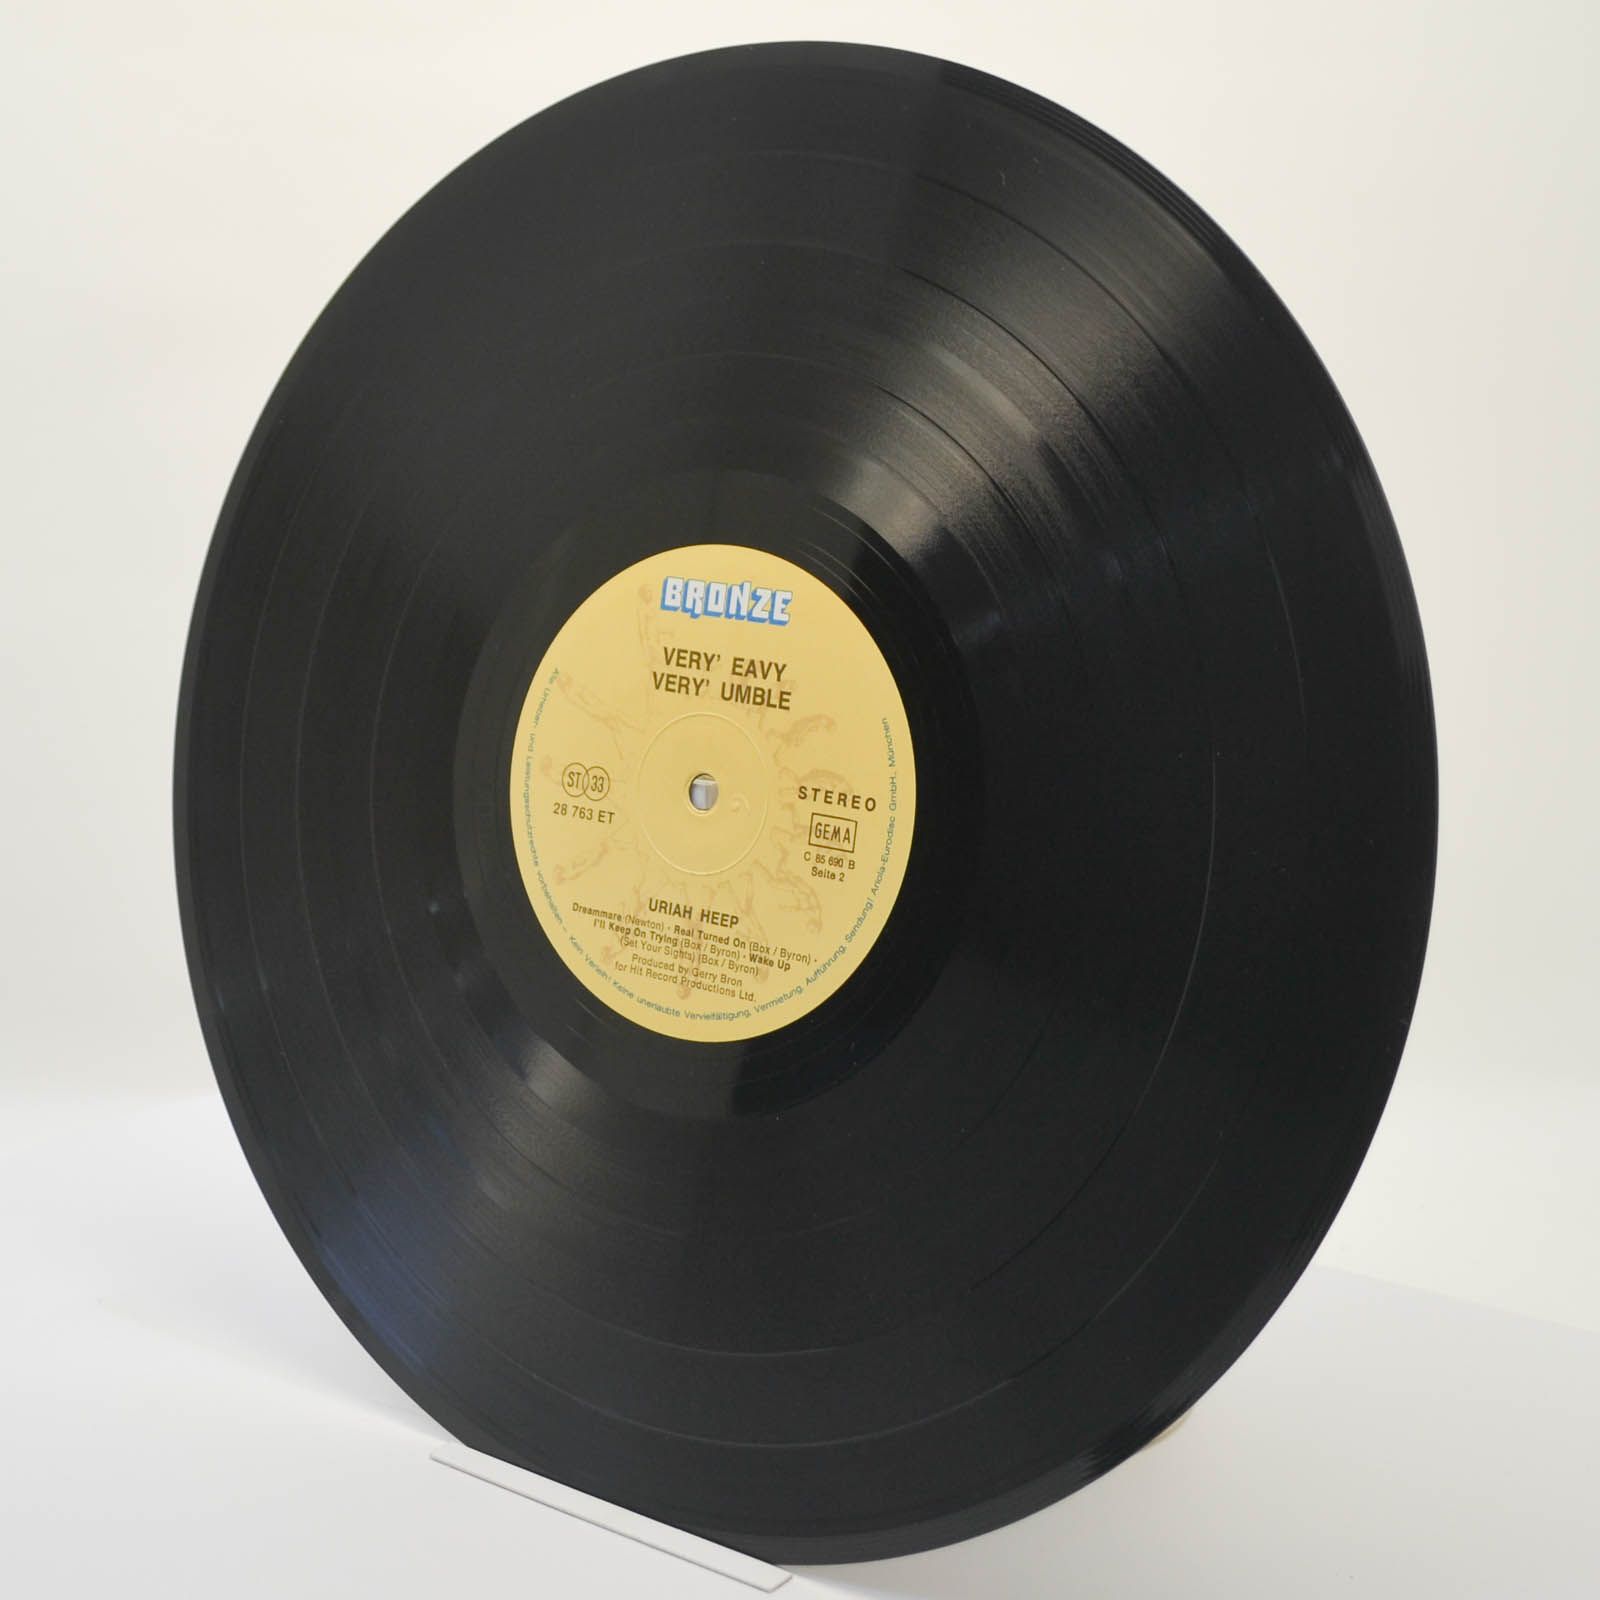 Uriah Heep — ...Very 'Eavy ...Very 'Umble, 1970